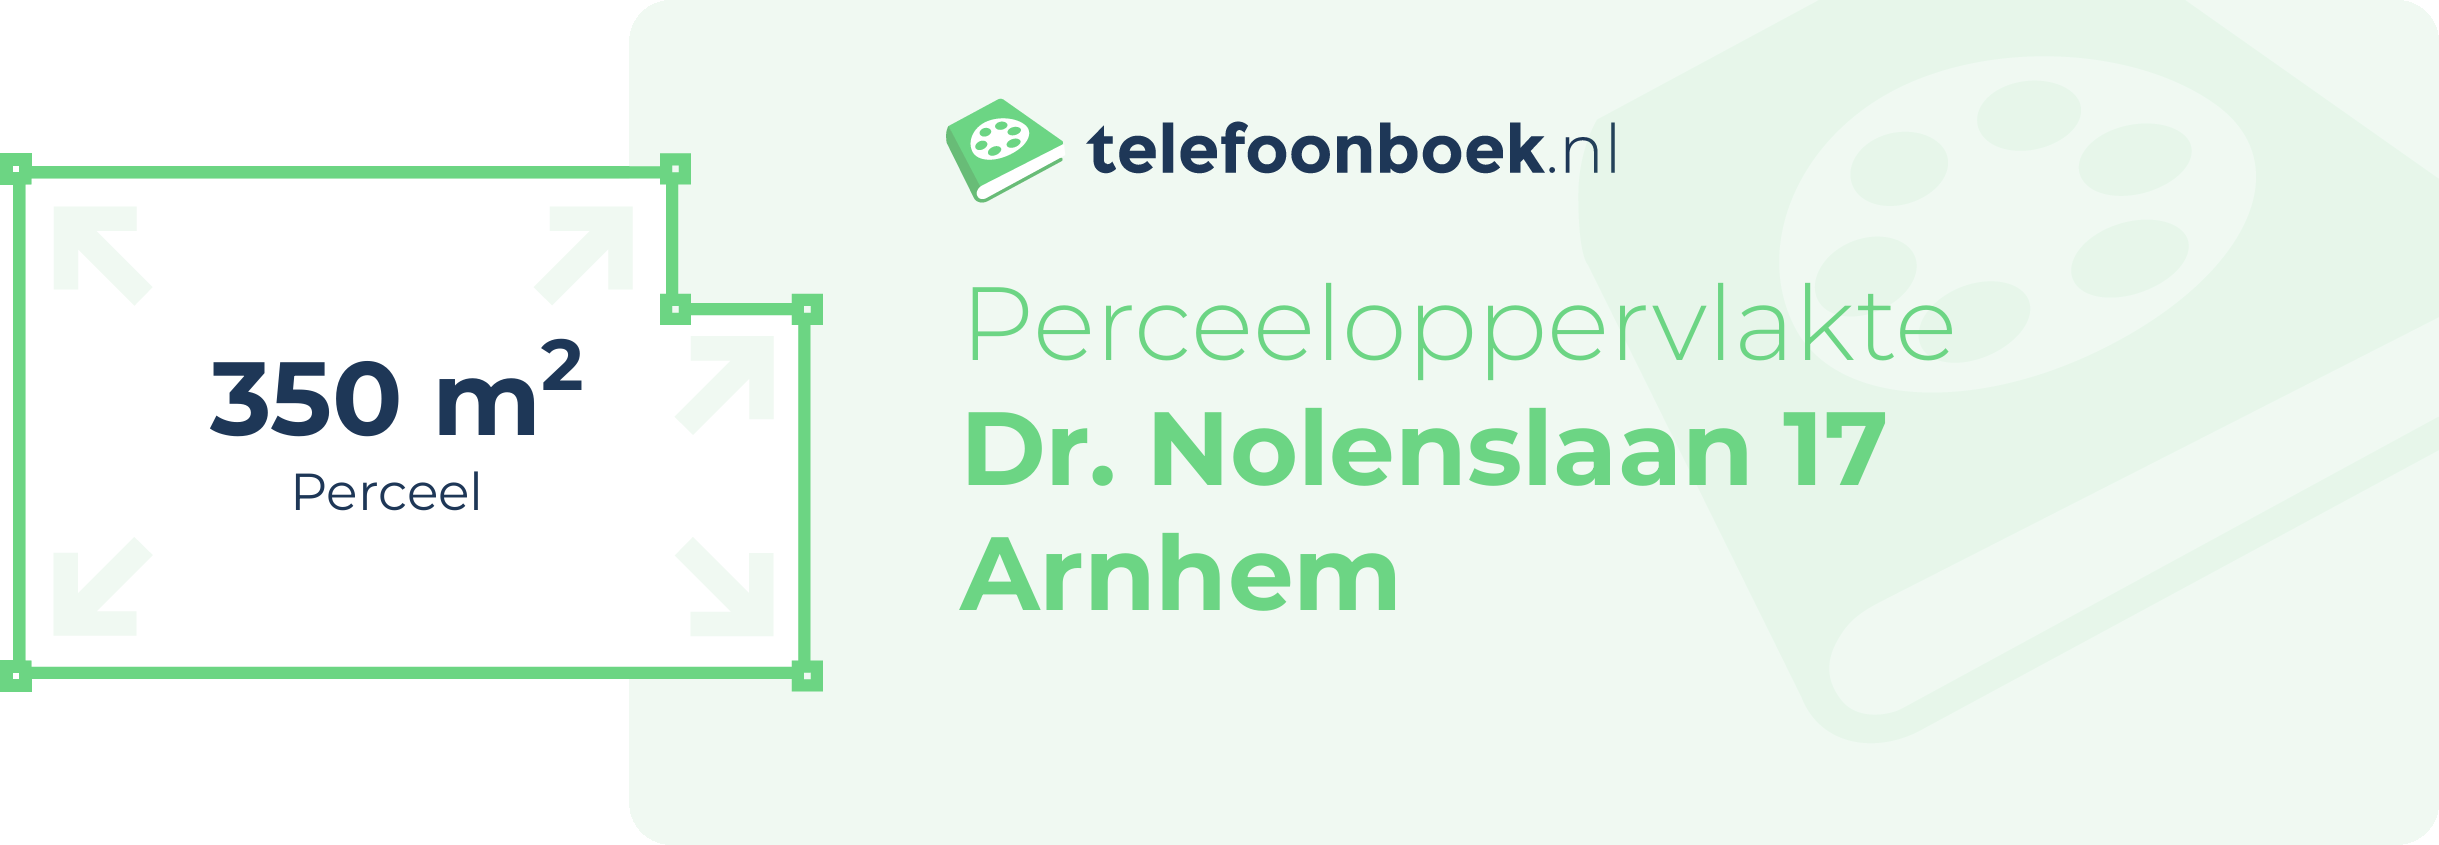 Perceeloppervlakte Dr. Nolenslaan 17 Arnhem